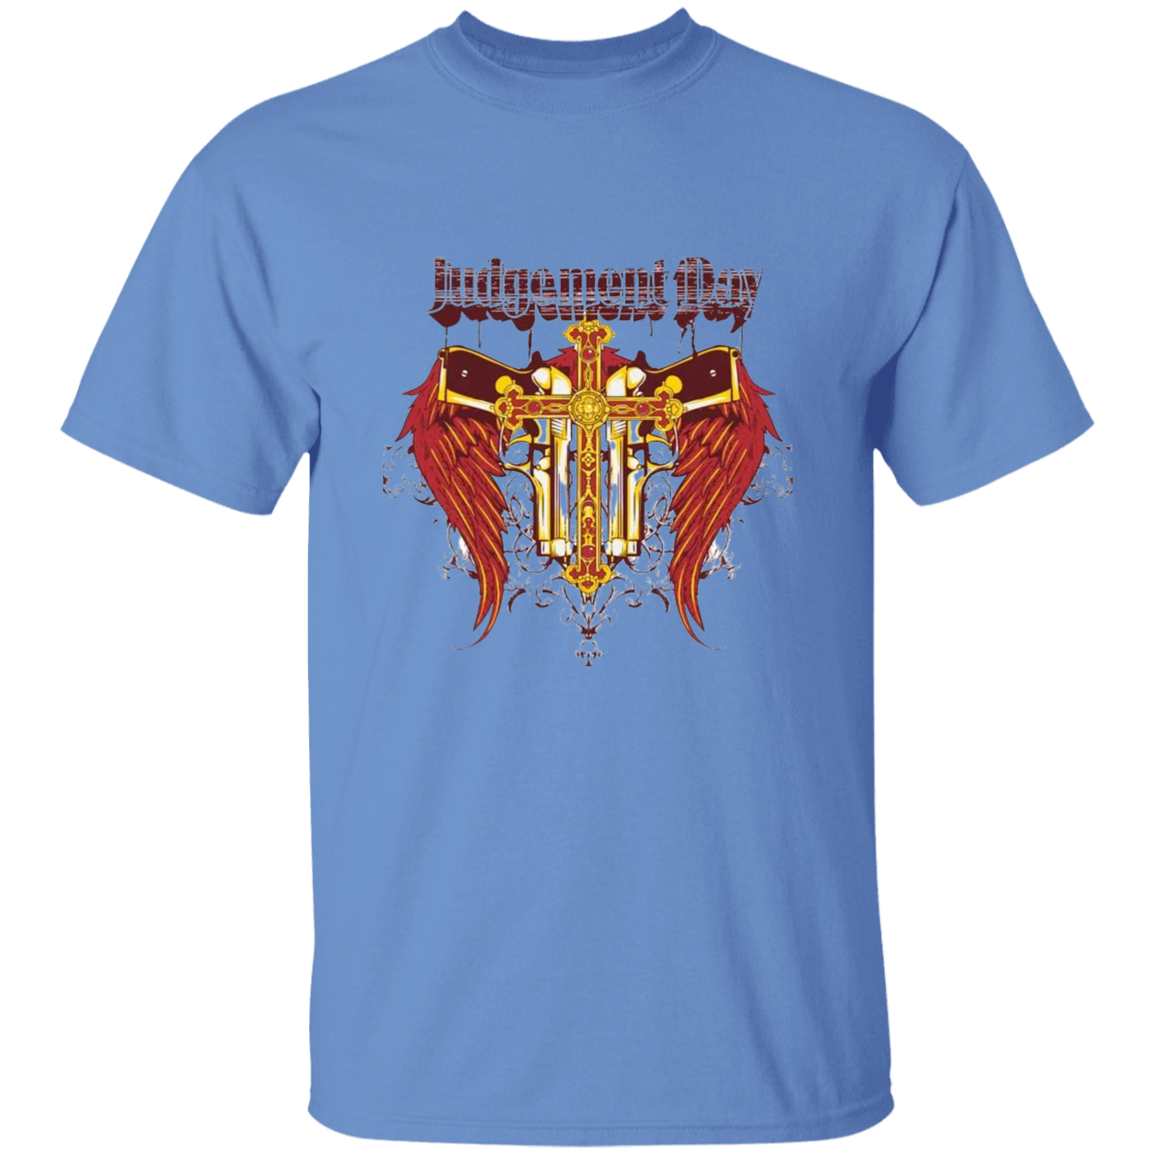 Judgment Day T-Shirt, Church Tee, Religious T-Shirt, Christian T-shirt, Bible Verse Clothing, Prayer Tee